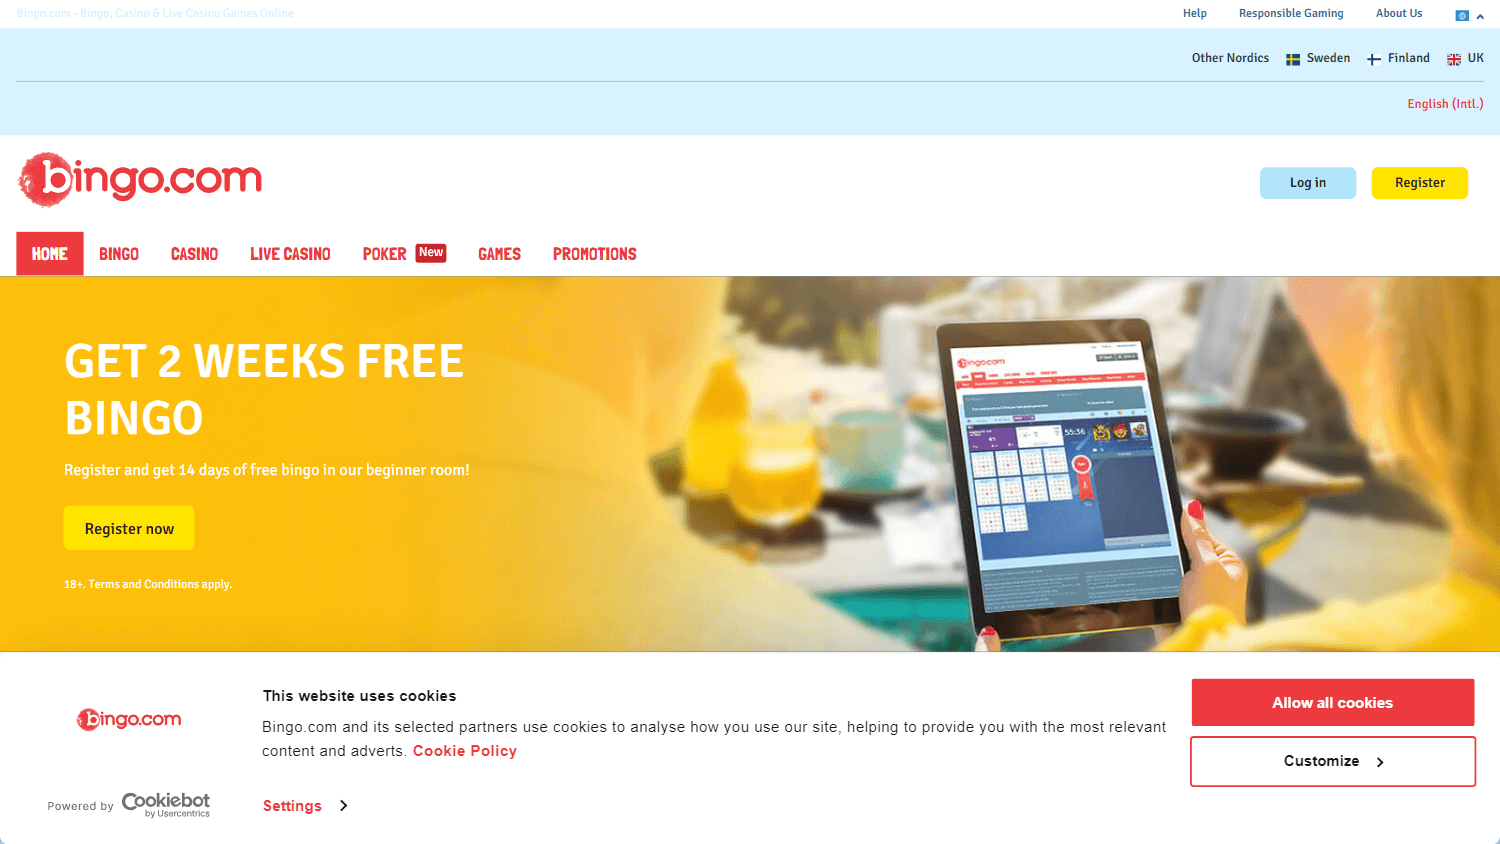 bingo.com_casino_homepage_desktop